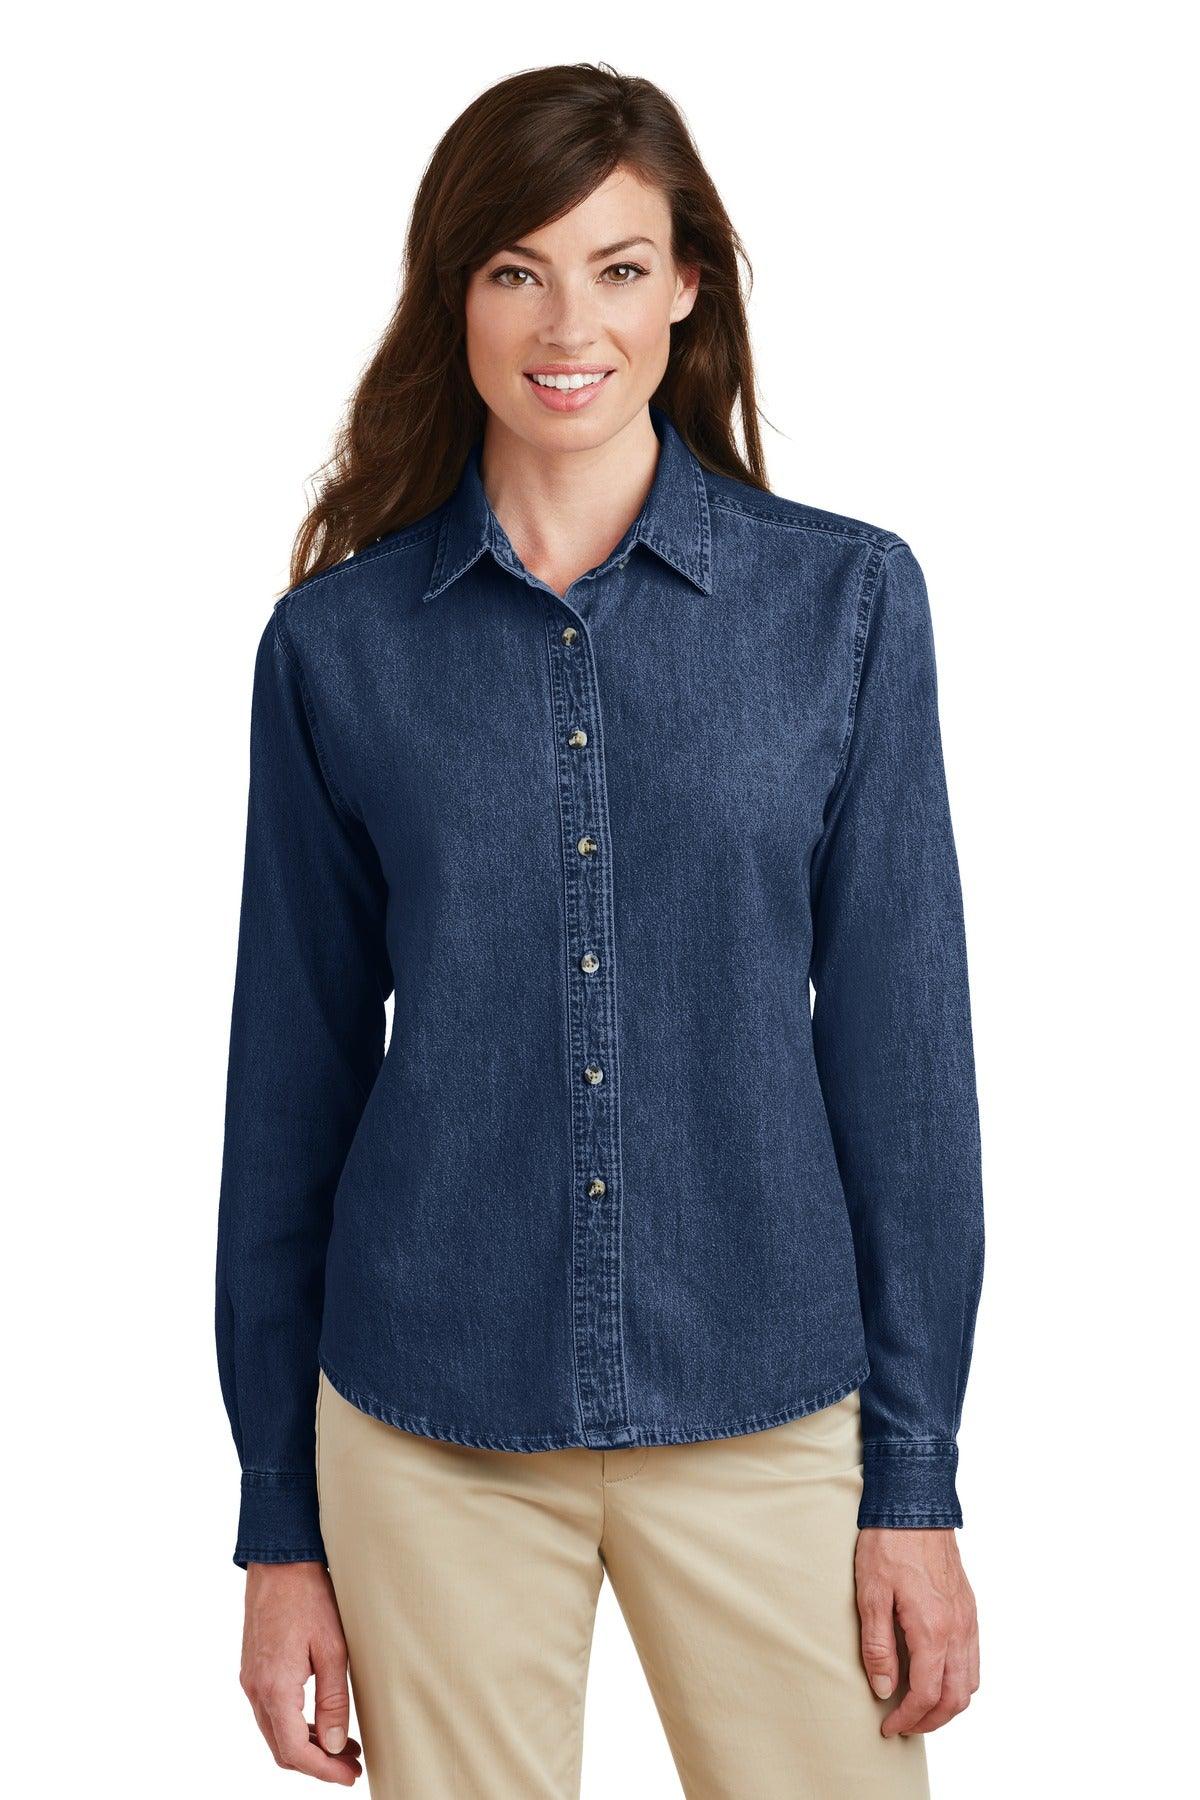 Port & Company - Ladies Long Sleeve Value Denim Shirt. LSP10 - Dresses Max